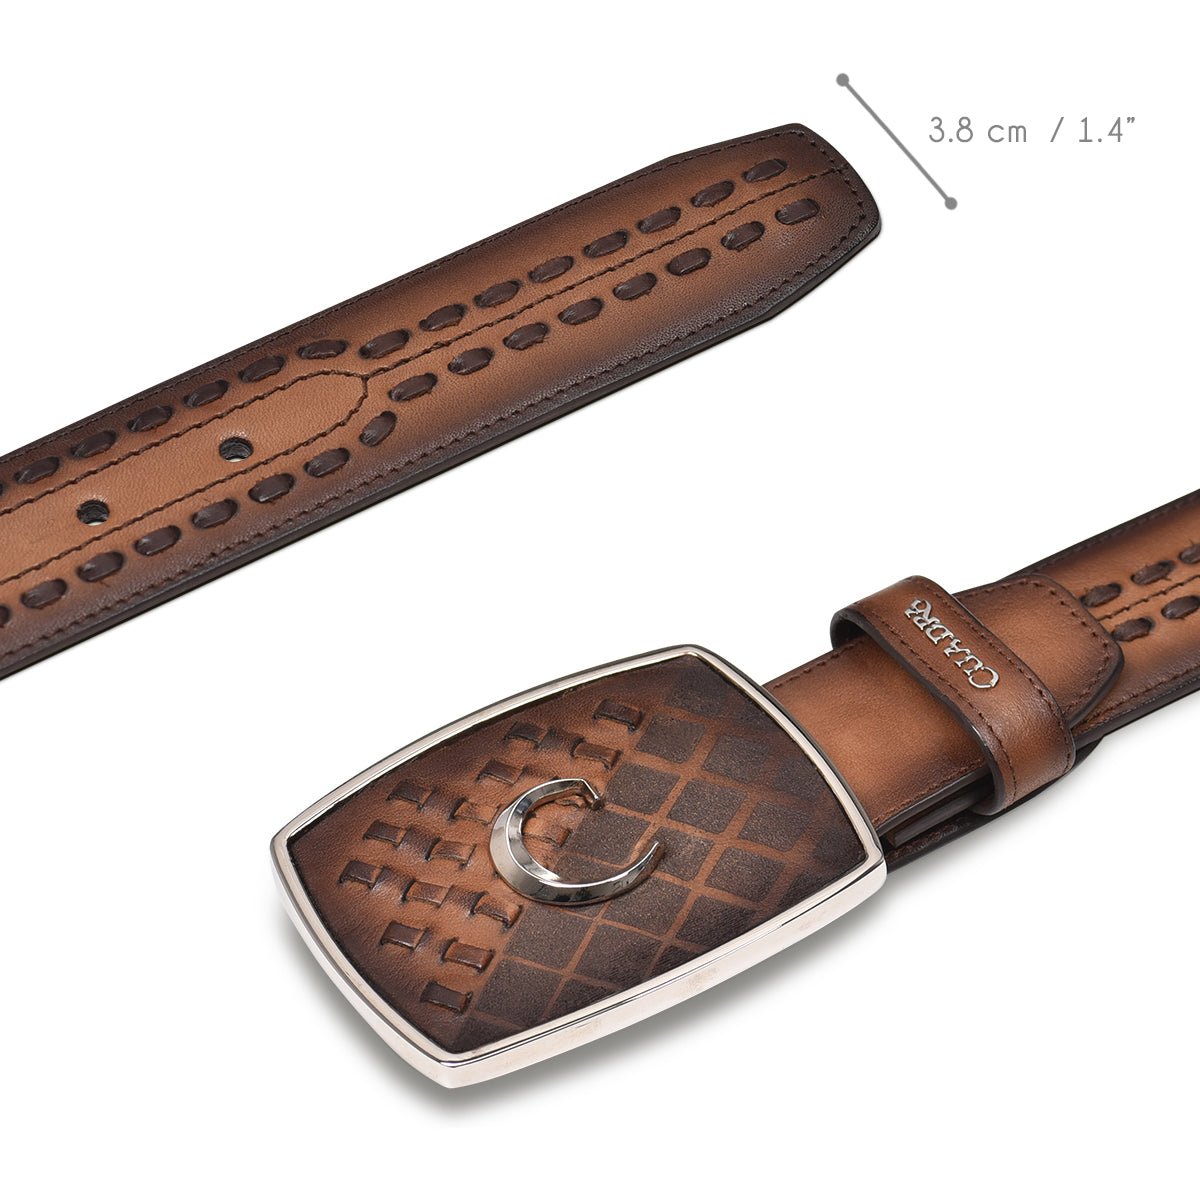 Hand-painted honey leather laser engraved western belt